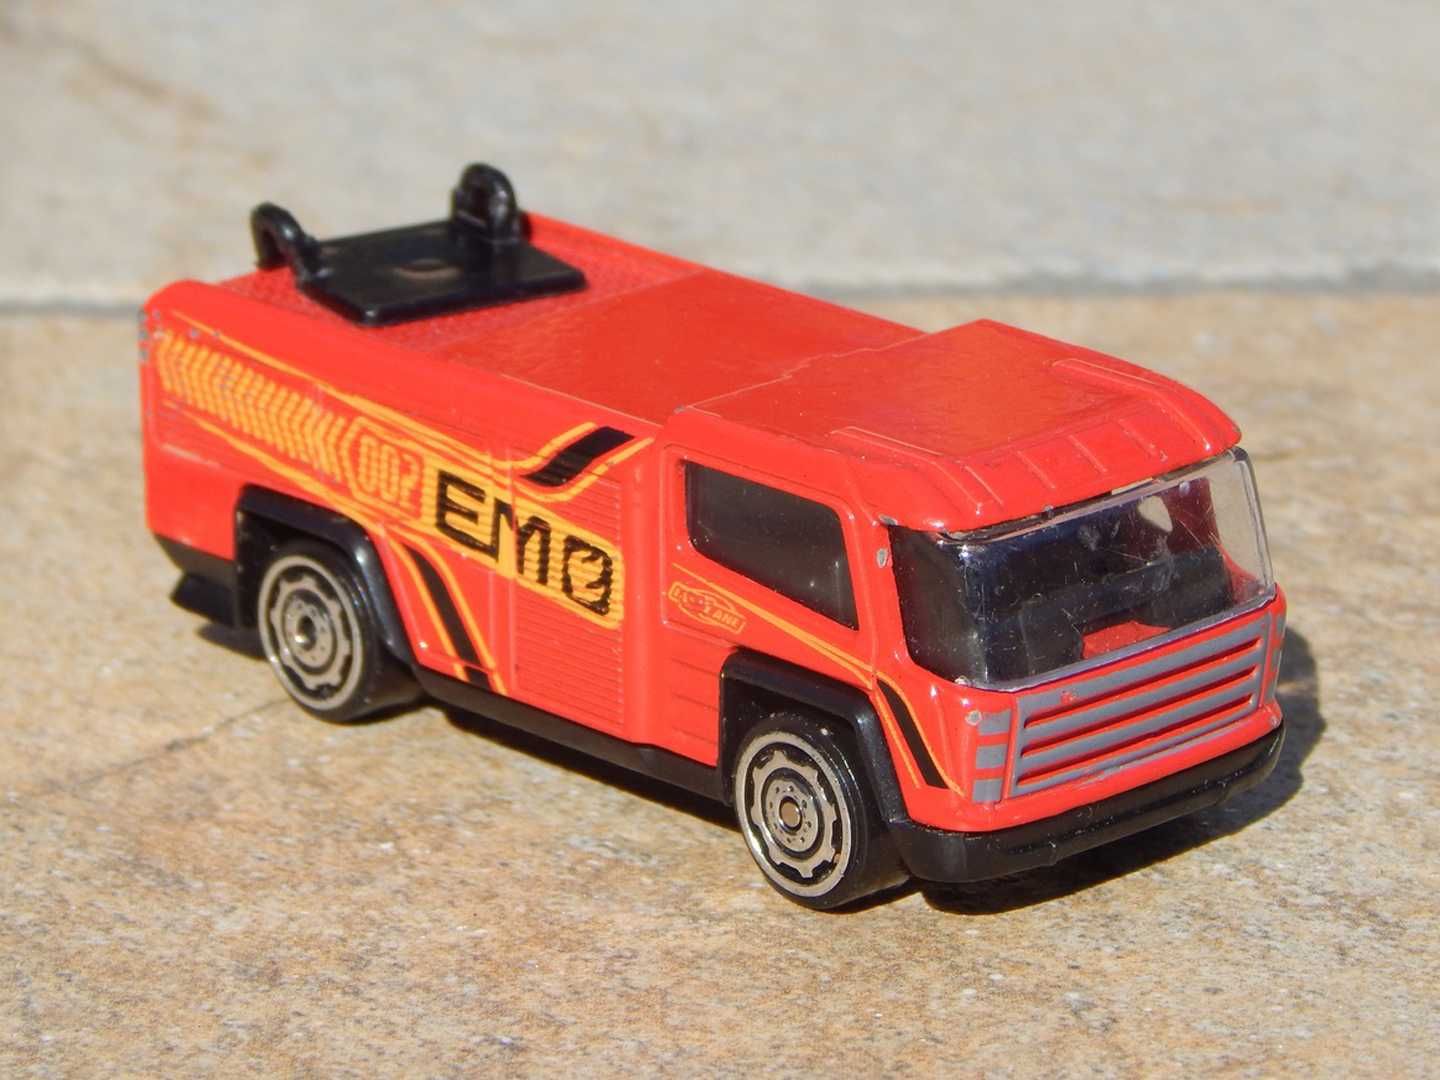 Jucarie masina pompieri Fast Lane EA-002 2013 sc 1:72